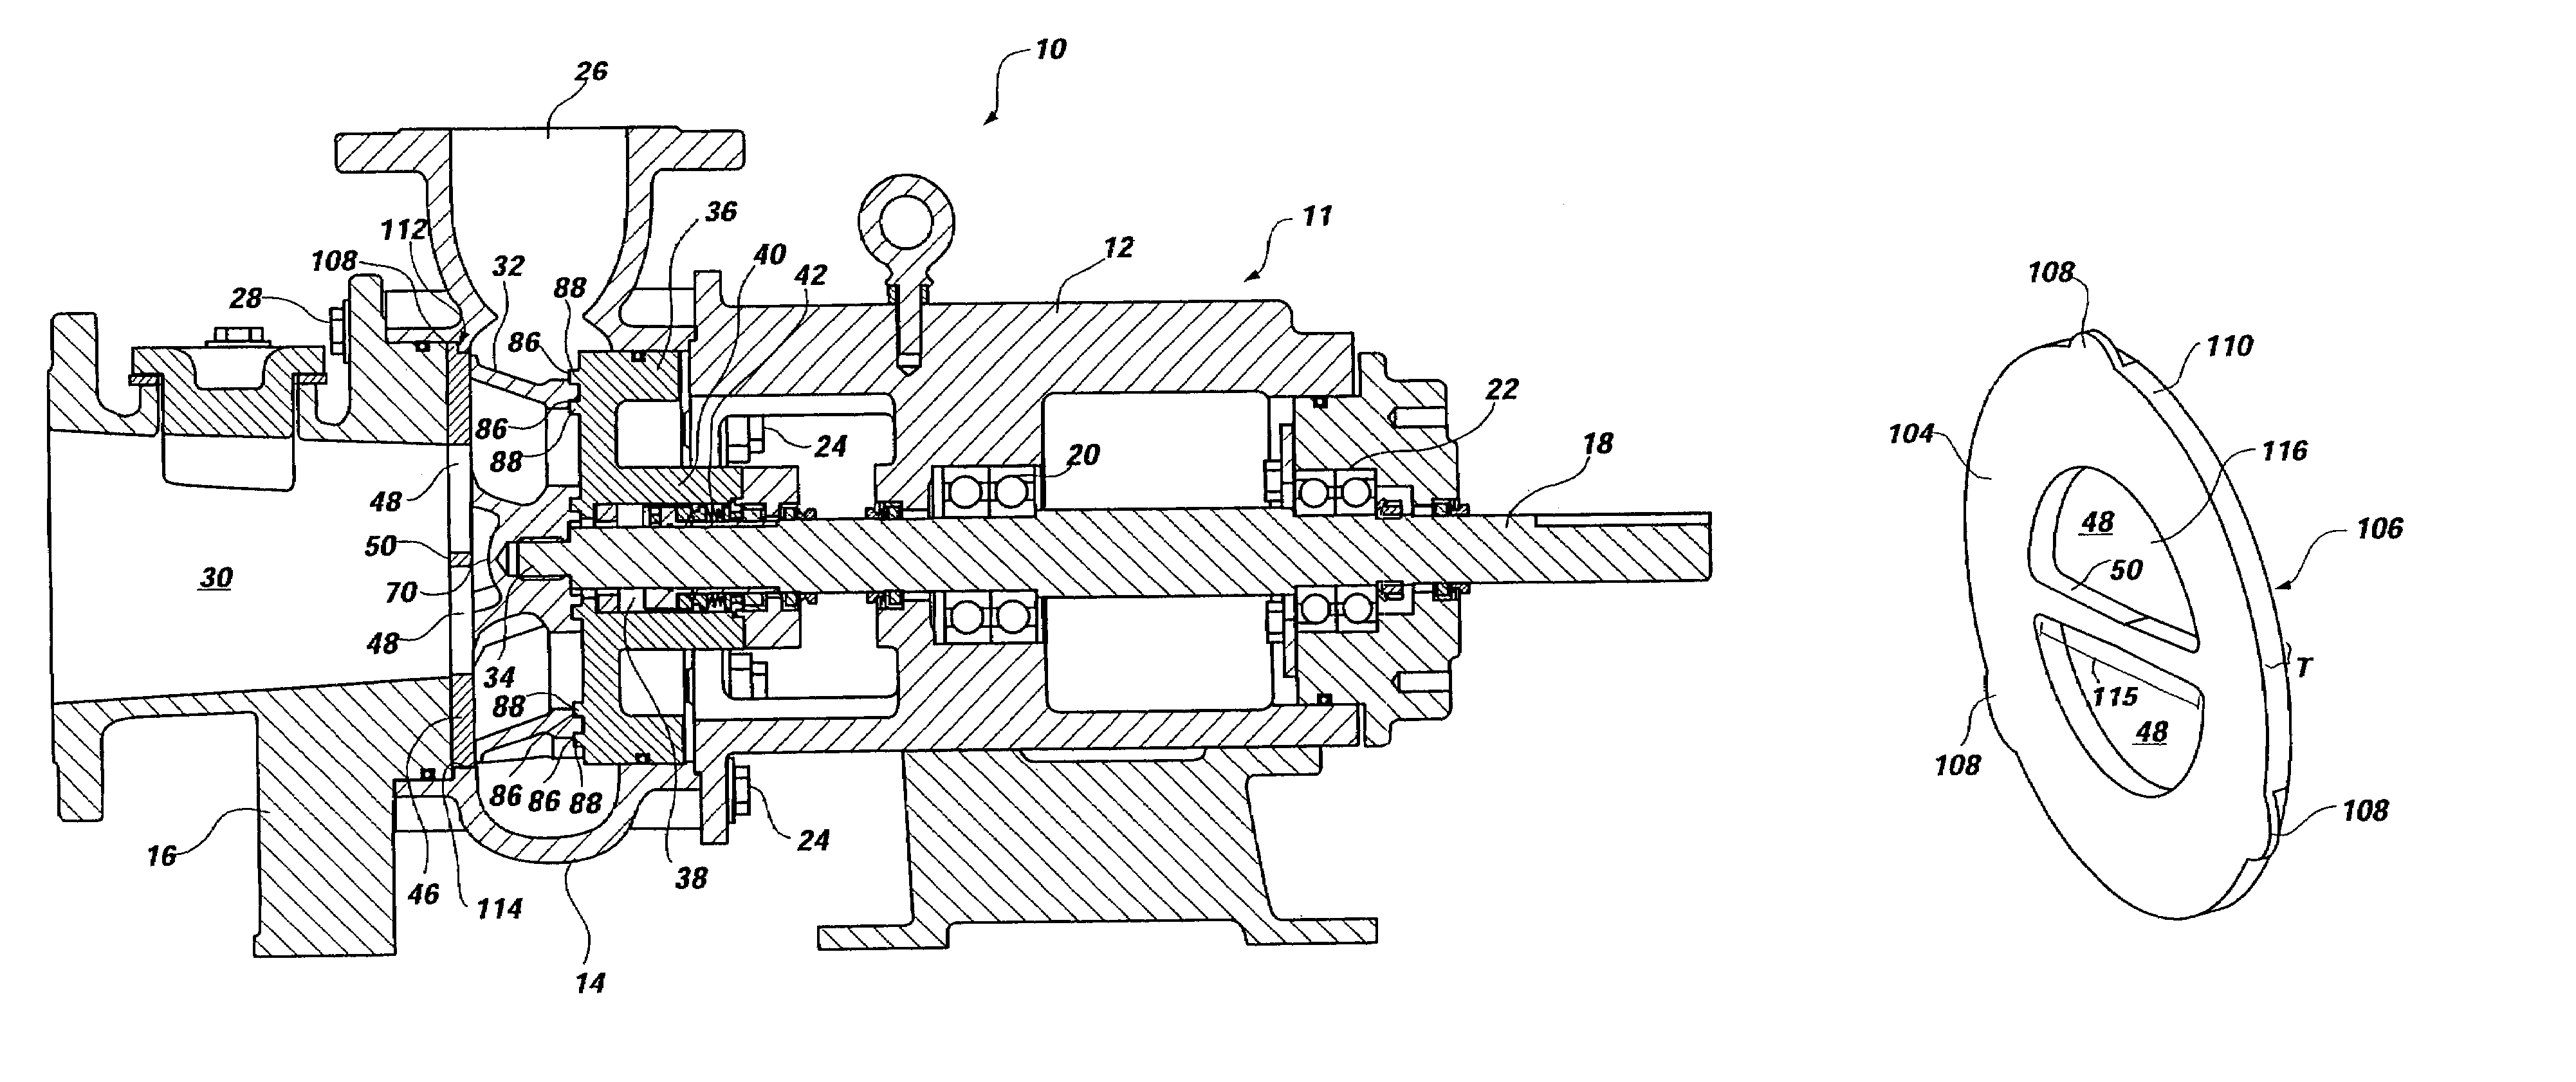 Pump impeller and chopper plate for a centrifugal pump